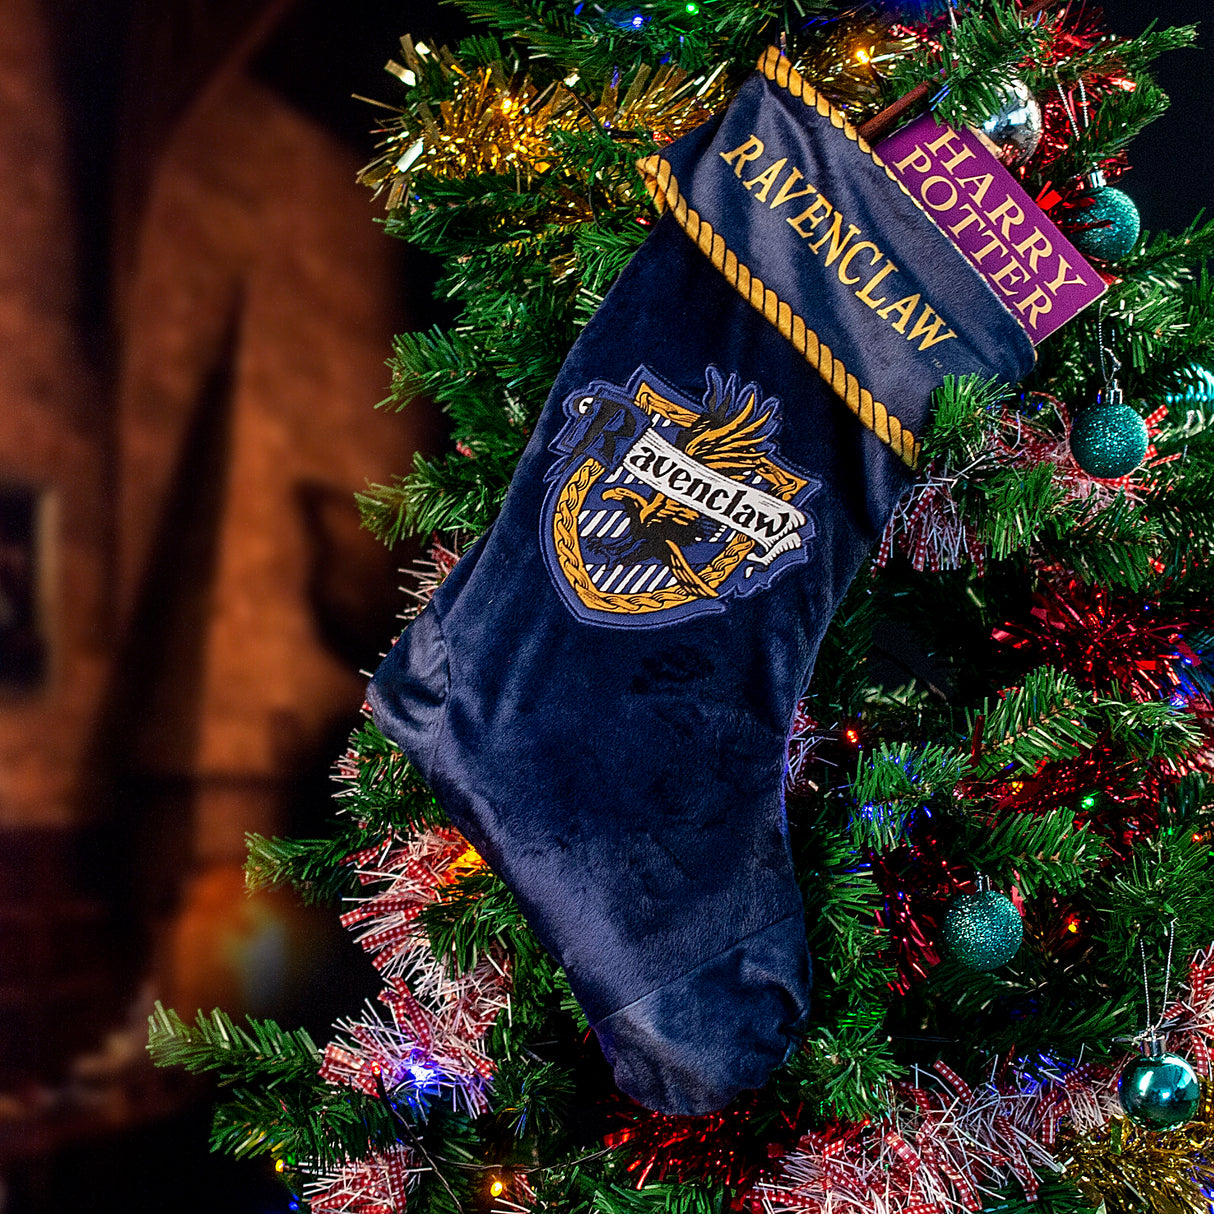 Harry Potter: Ravenclaw Christmas Stocking